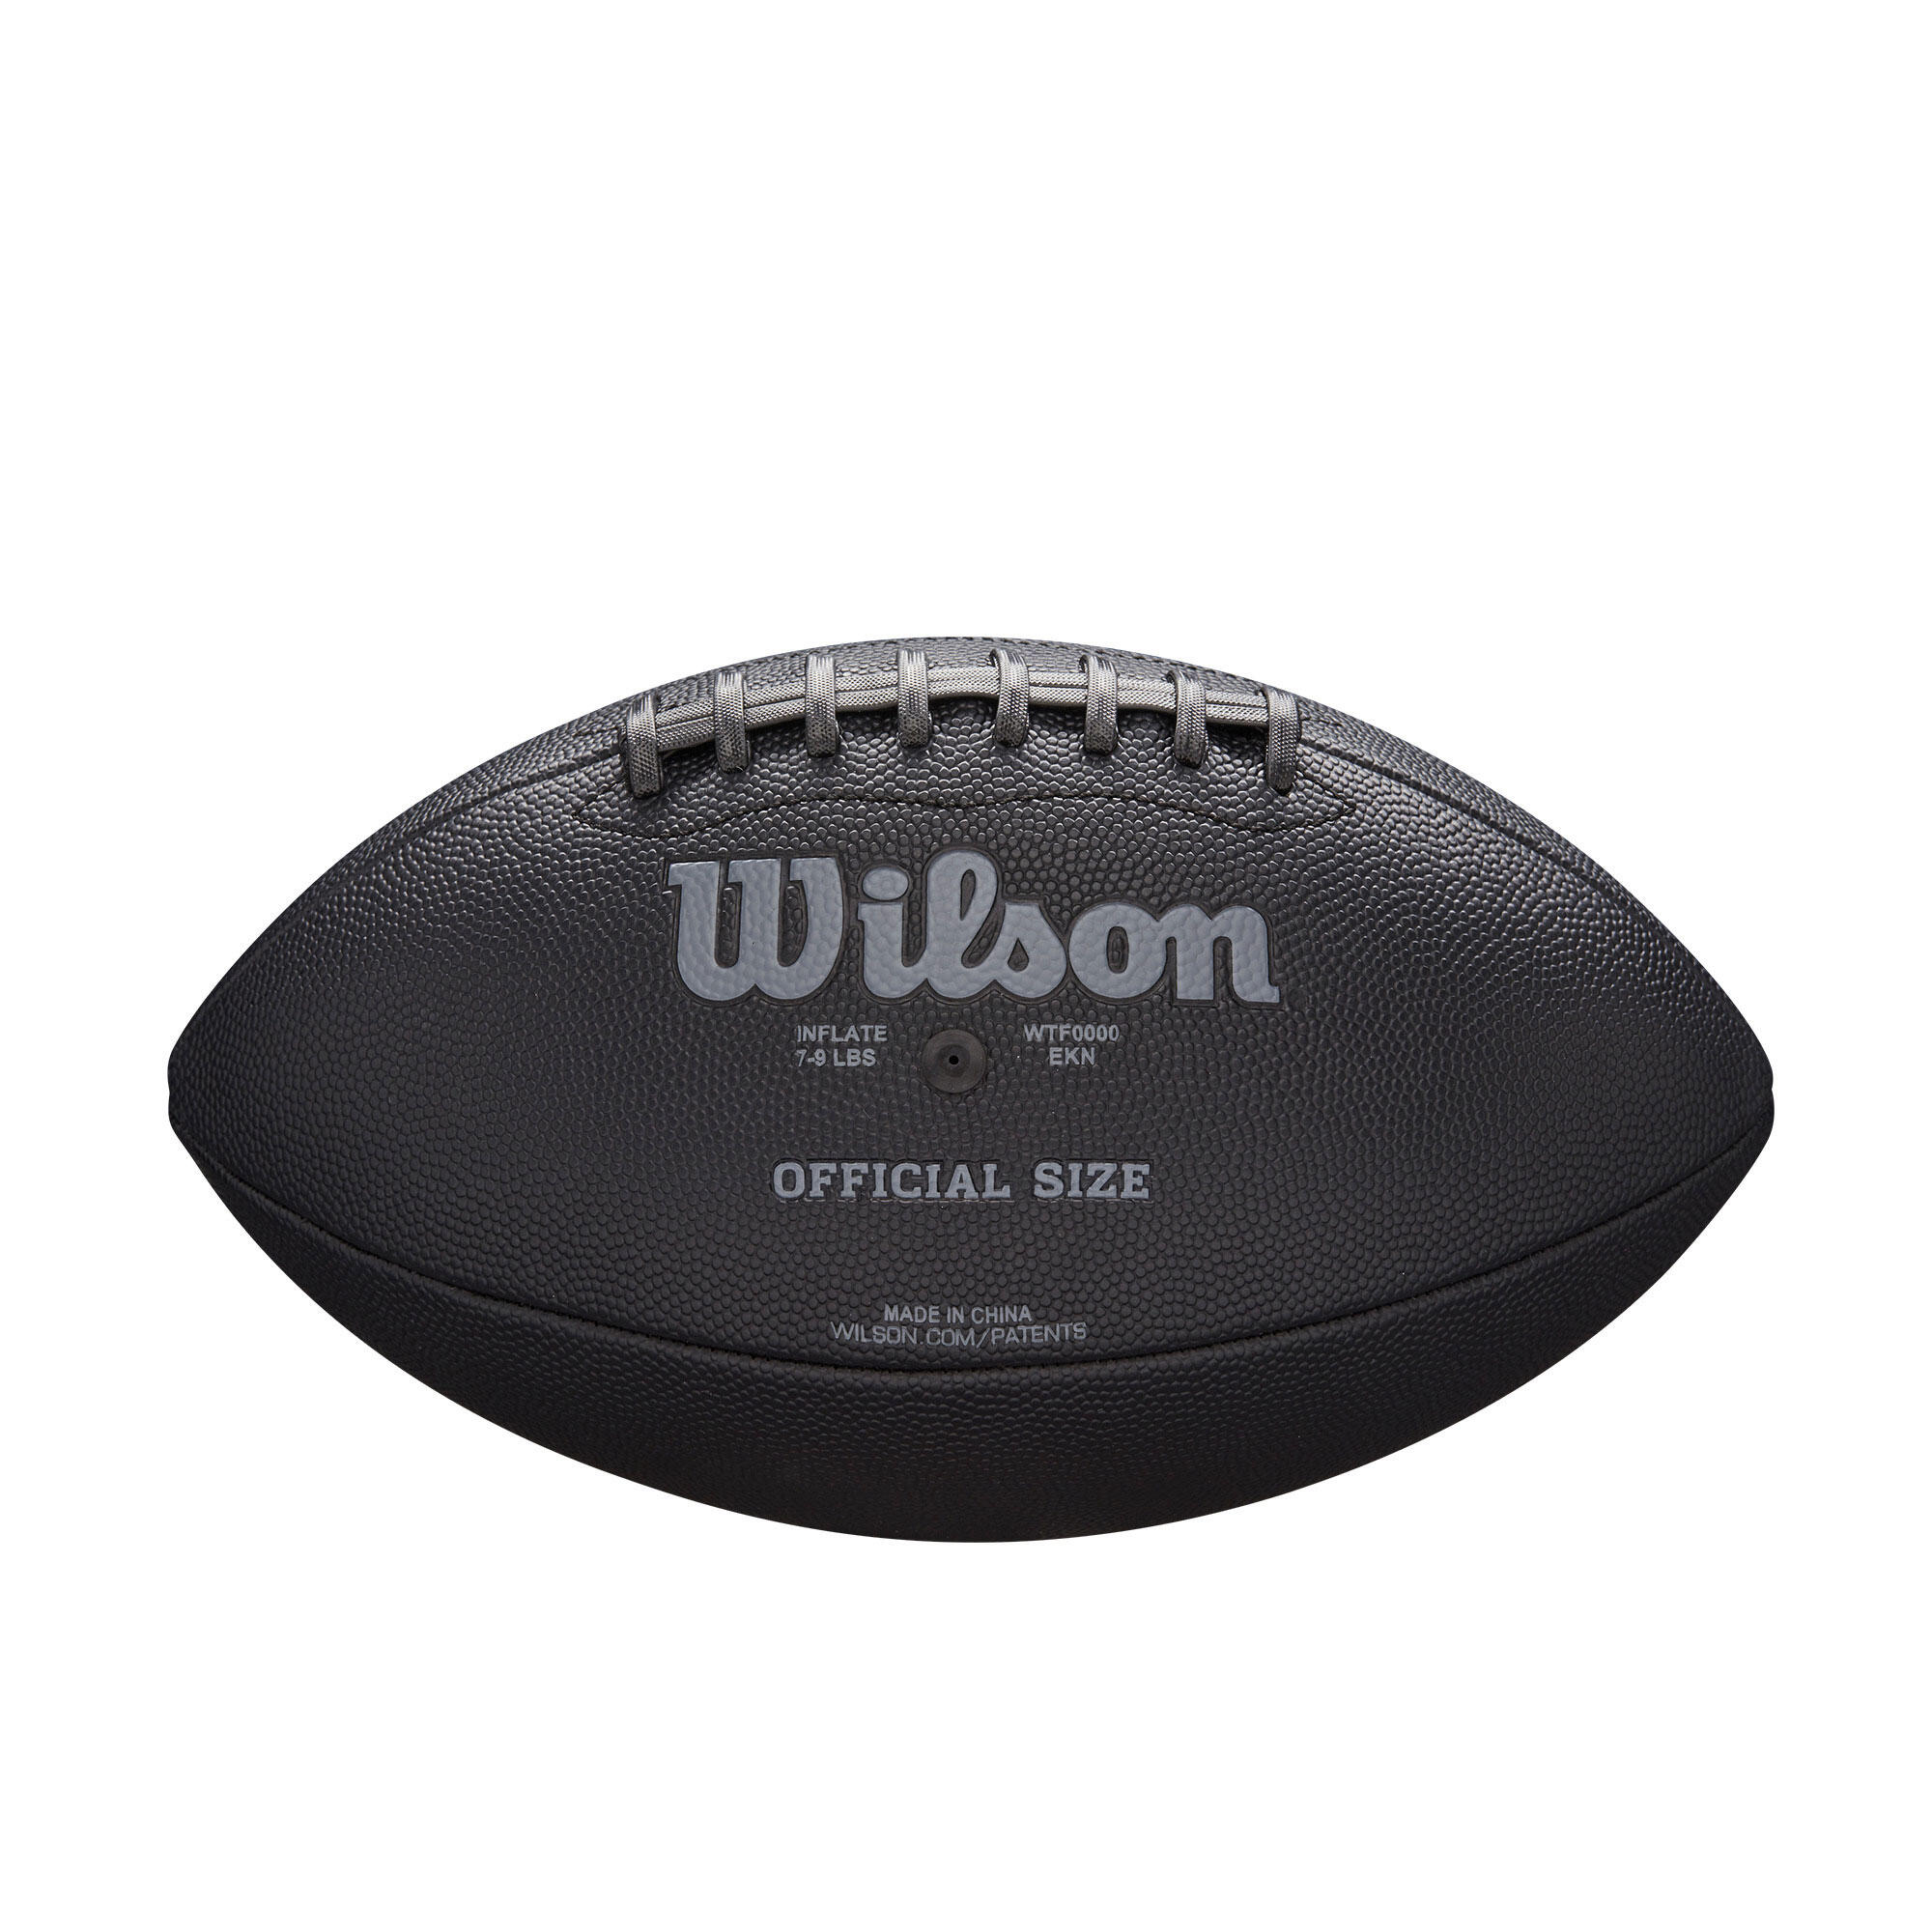 WILSON NFL American Football (Black)